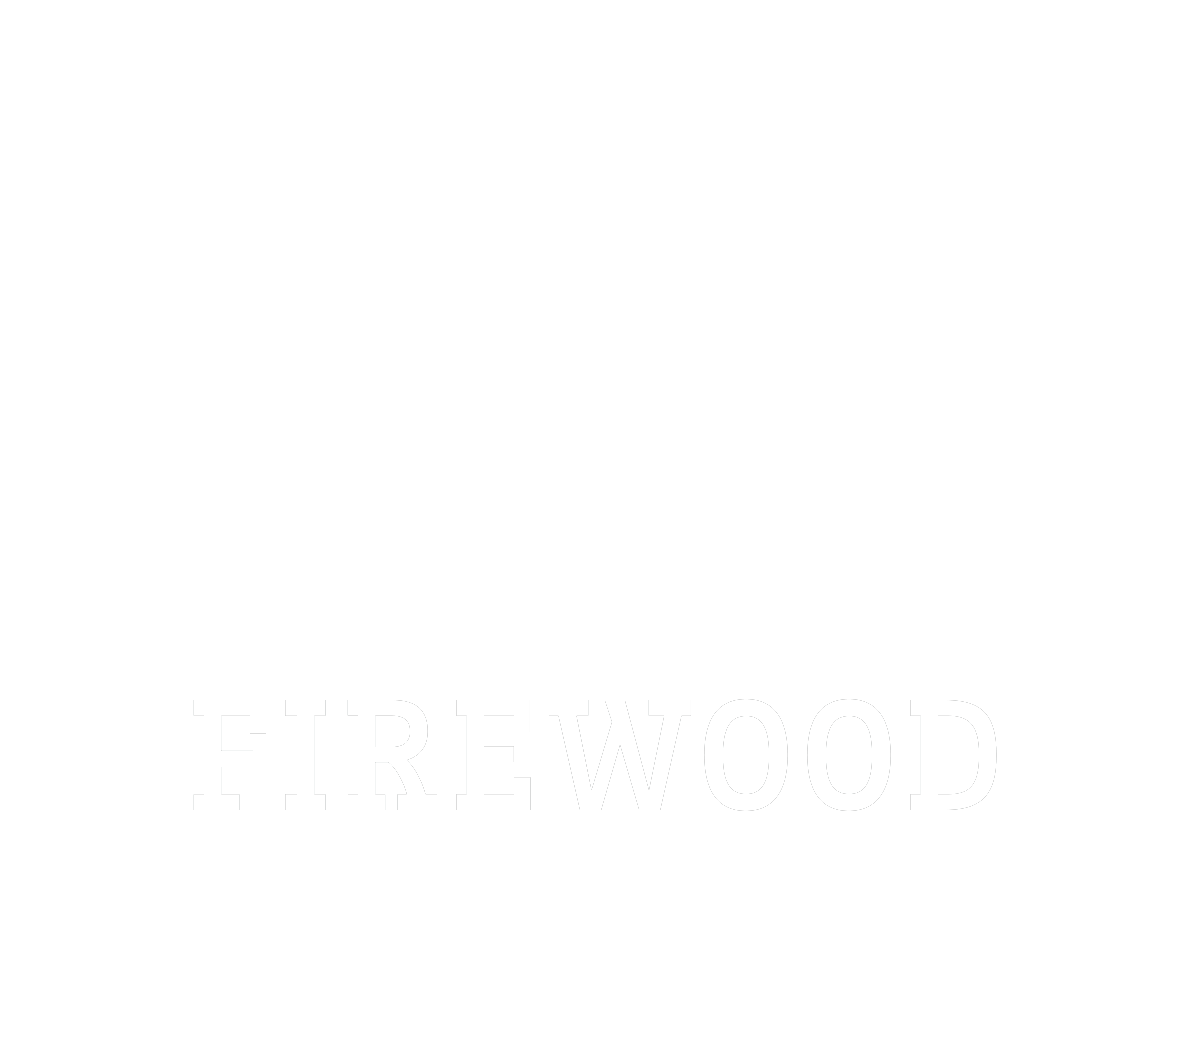 SEATTLE FIREWOOD COMPANY